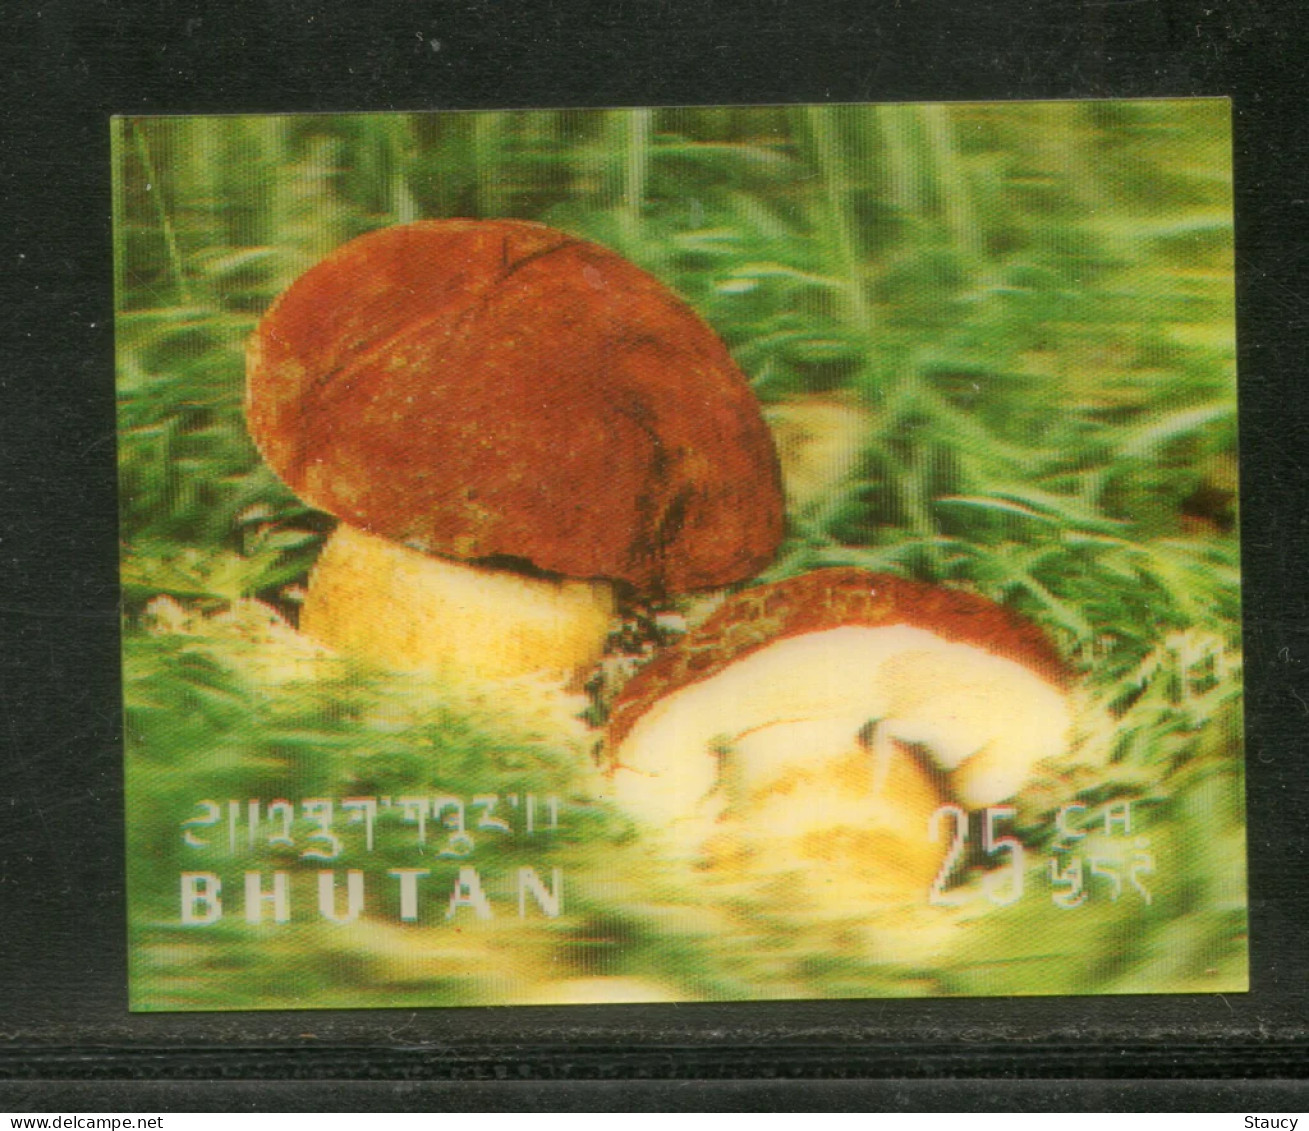 BHUTAN 1973 MUSHROOMS Plastic - 3-D Odd / Unusual / Unique Stamp MNH, As Per Scan - Fehldrucke